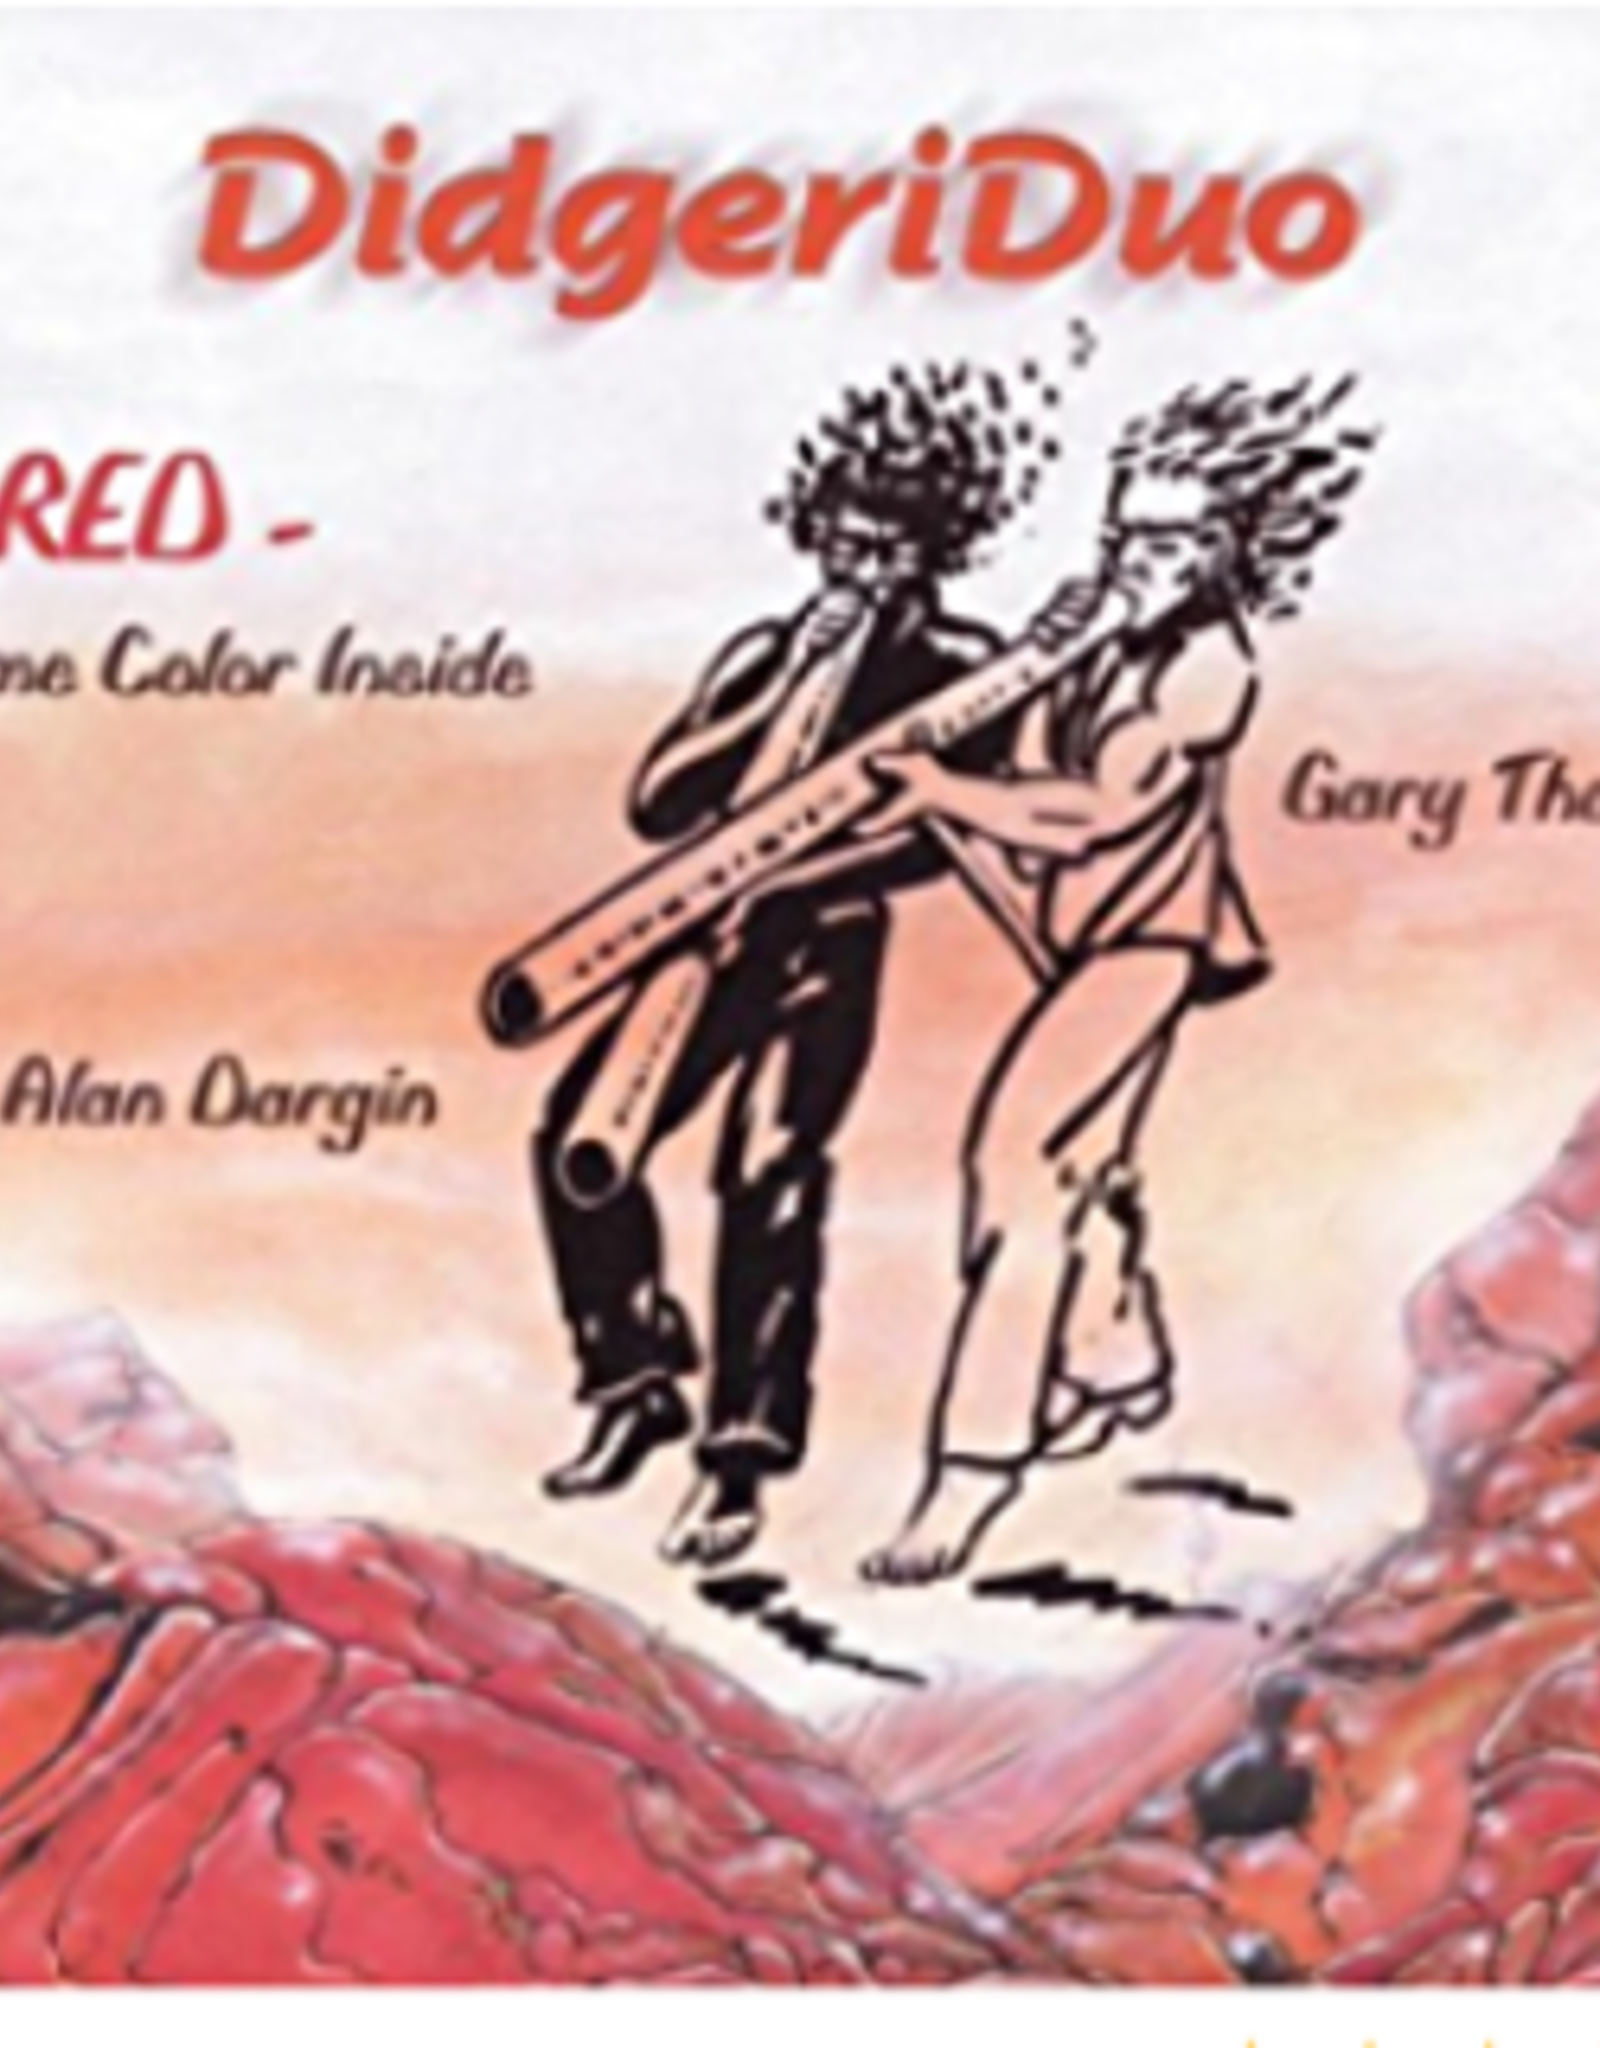 Alan Dargin DidgeriDuo CD by Alan Dargin & Gary Thomas